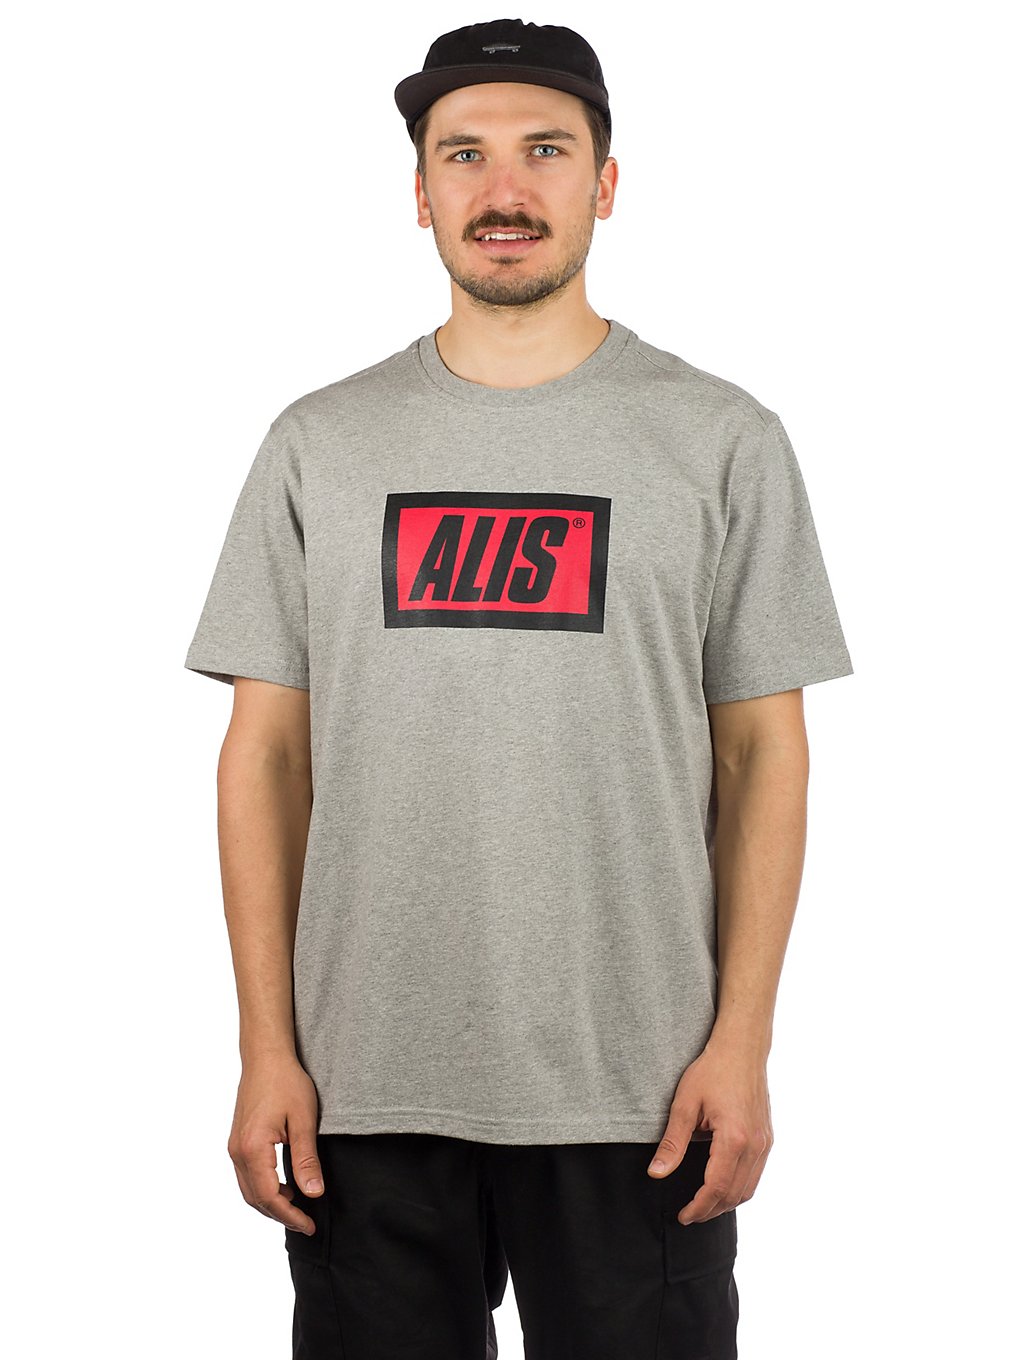 ALIS Classic T-Shirt heather grey